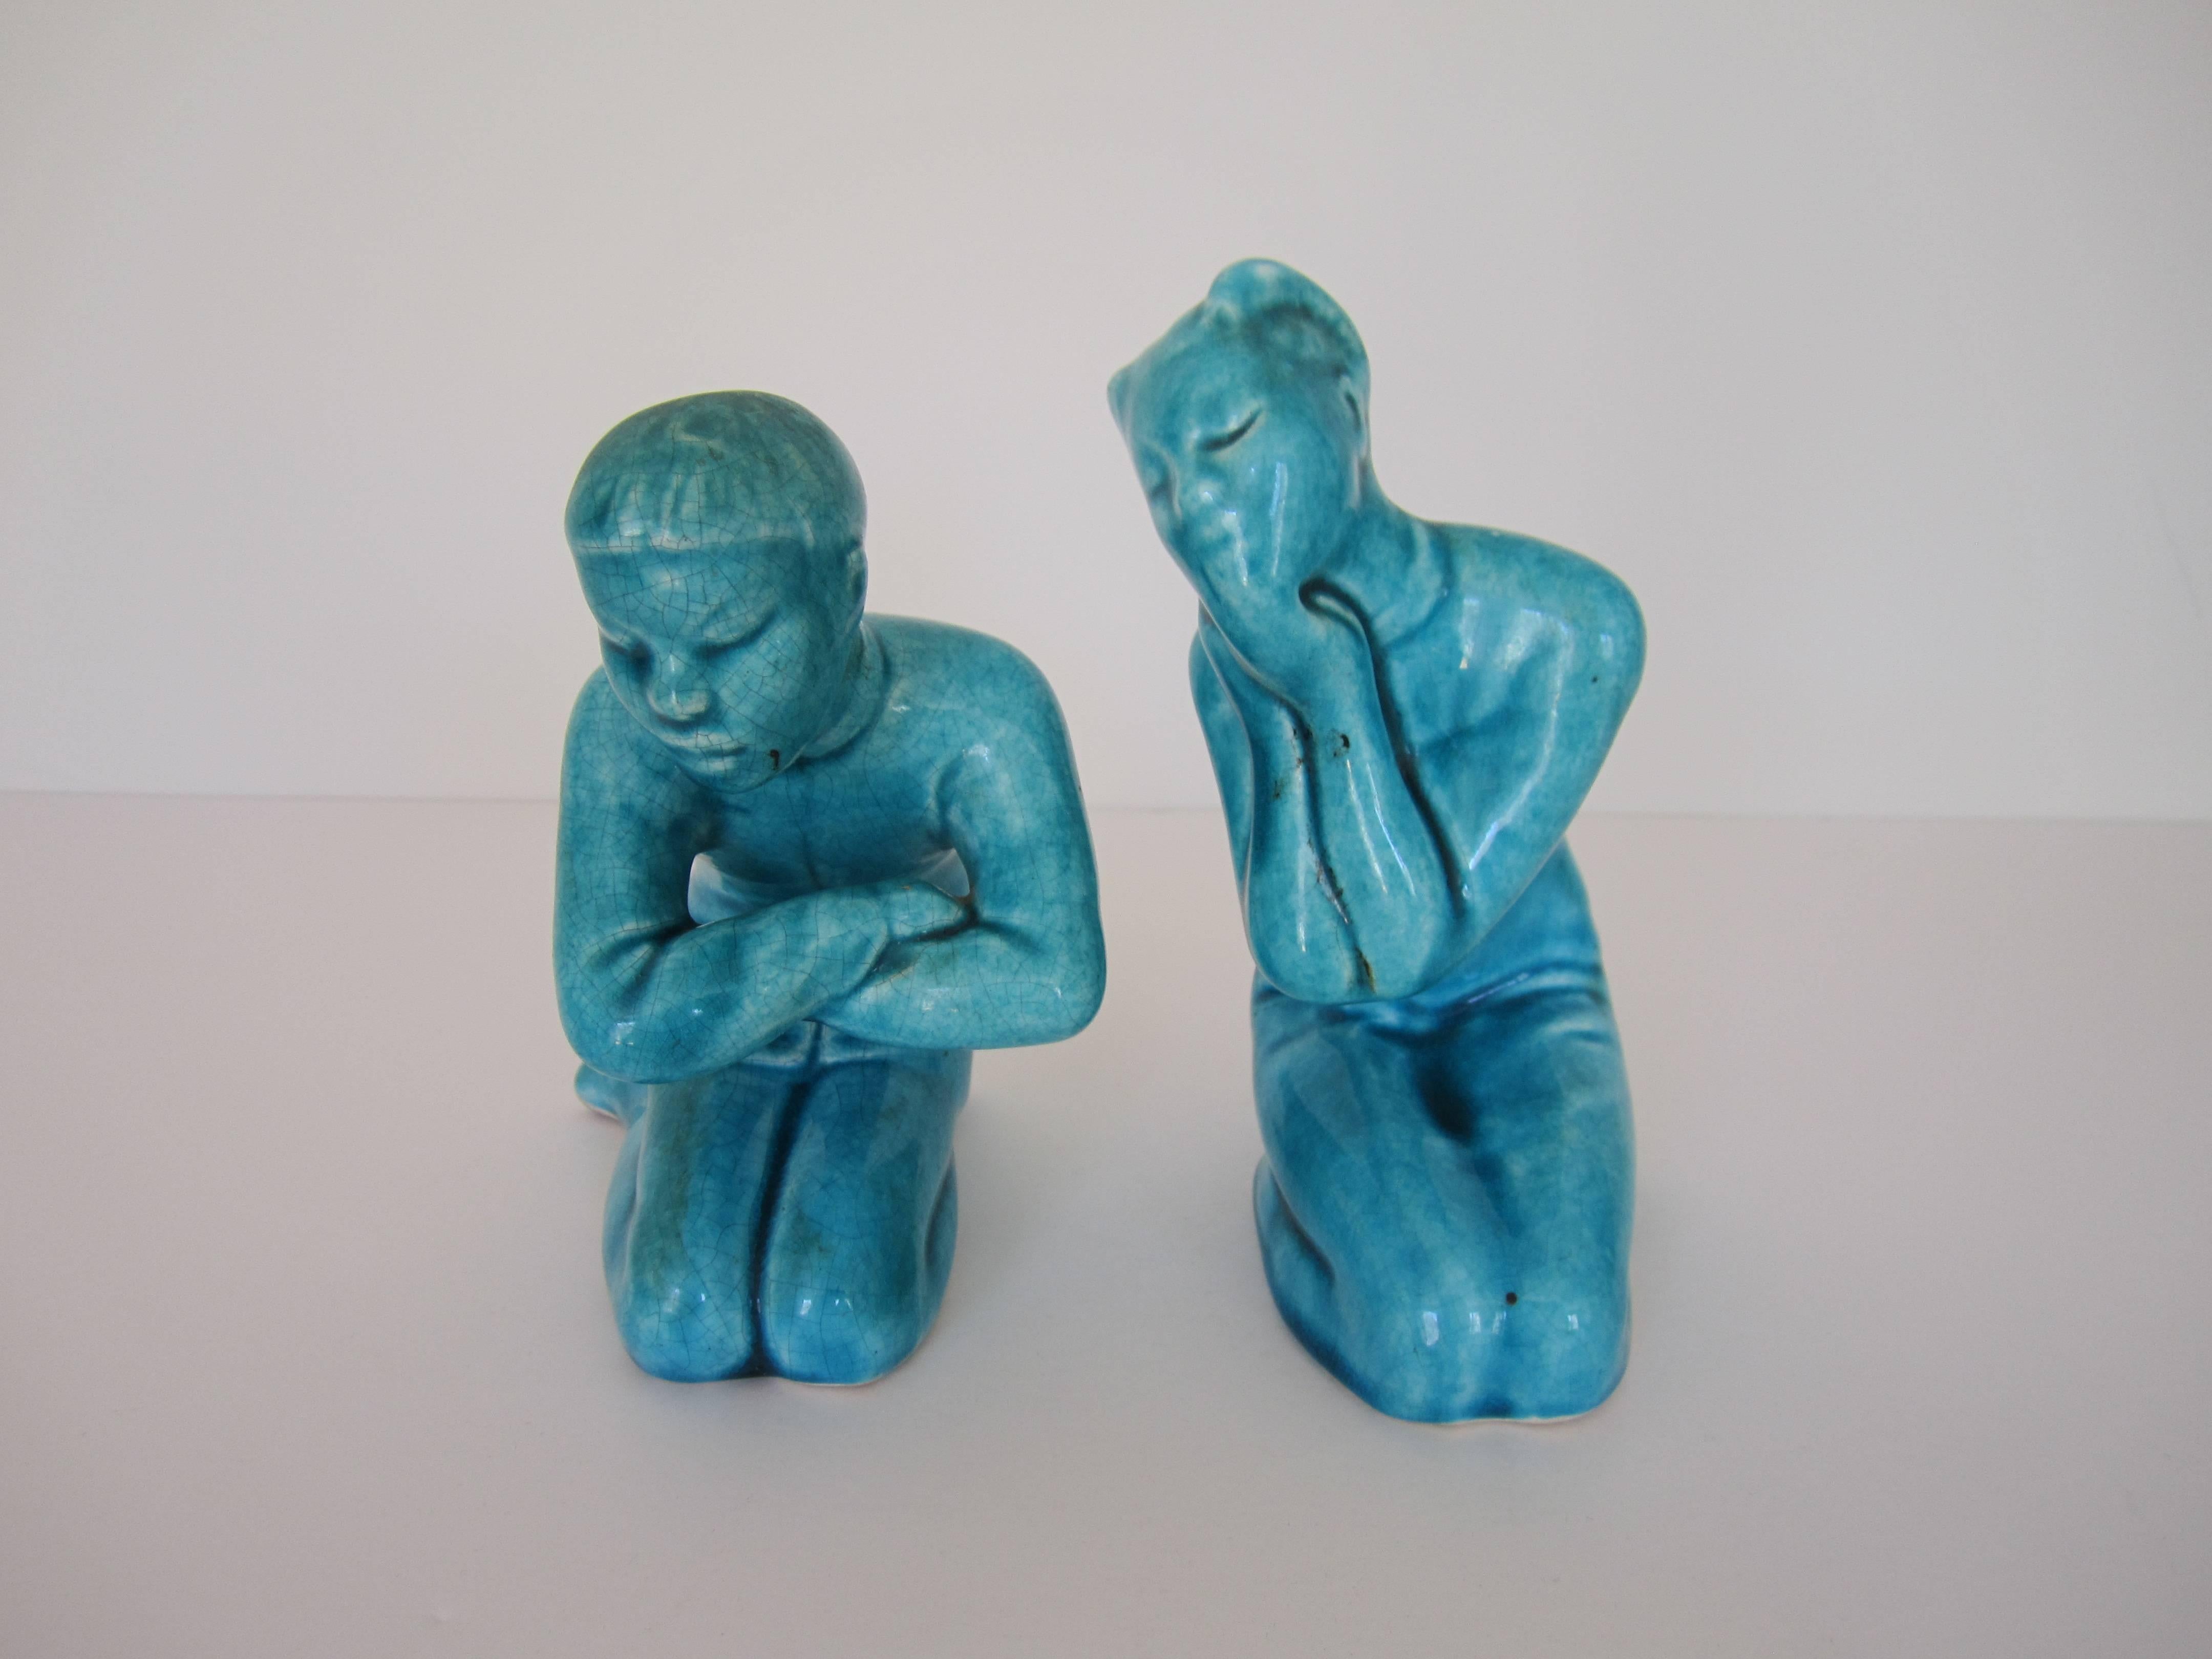 Japanese Pair of Mid-20th Century Turquoise Blue Asian Figural Ceramic Sculptures